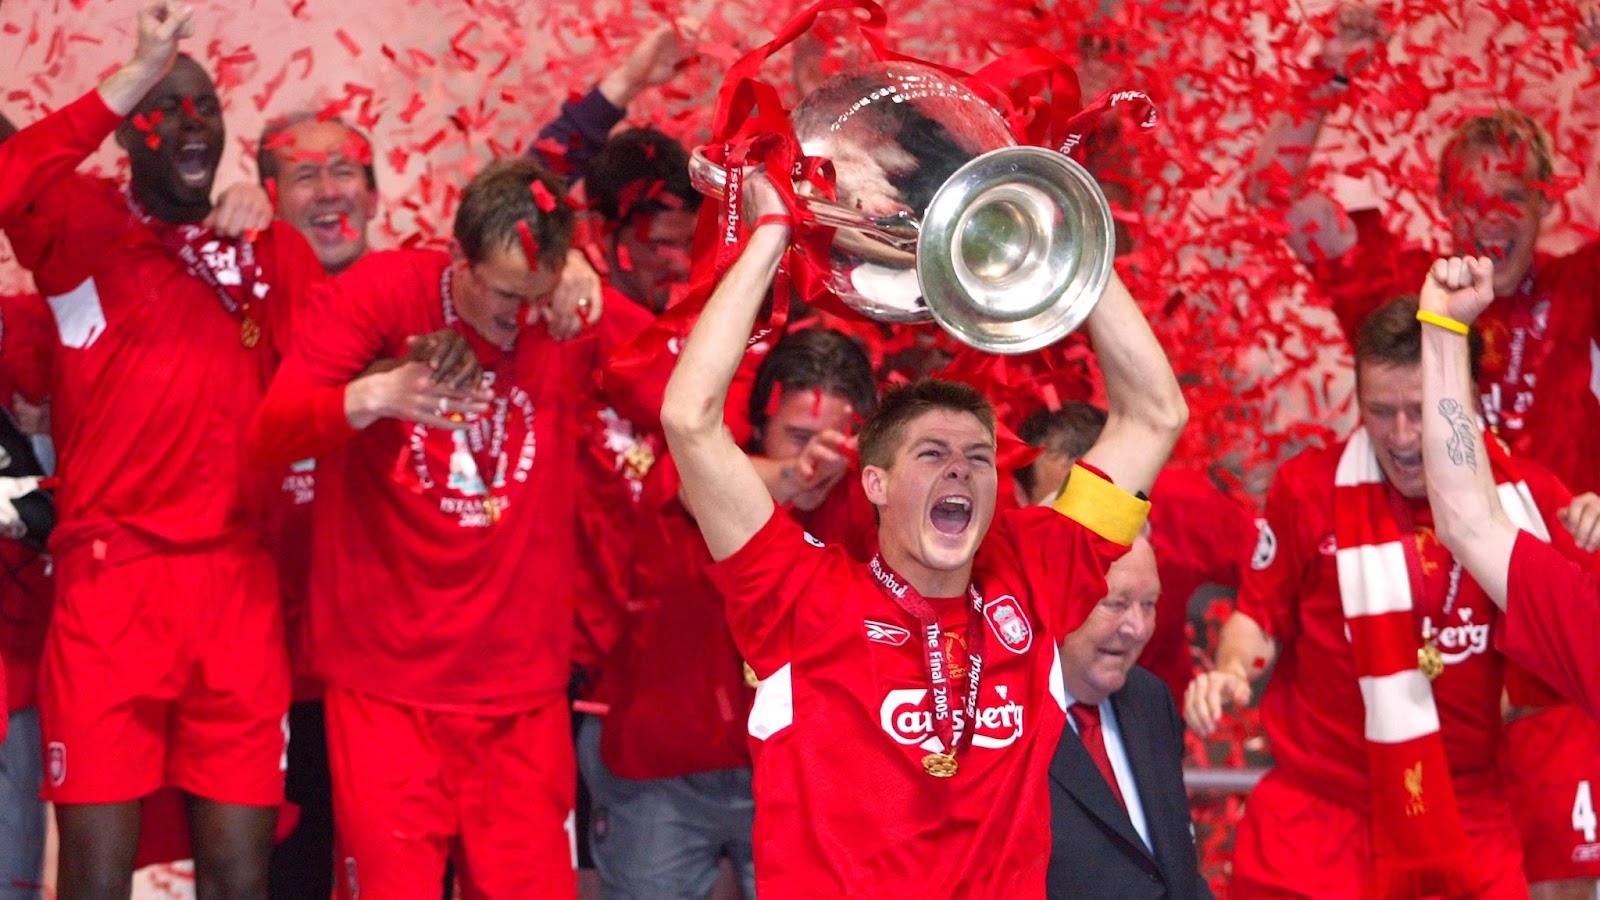 Steven Gerrard levantando la Champions League, liderando al Liverpool